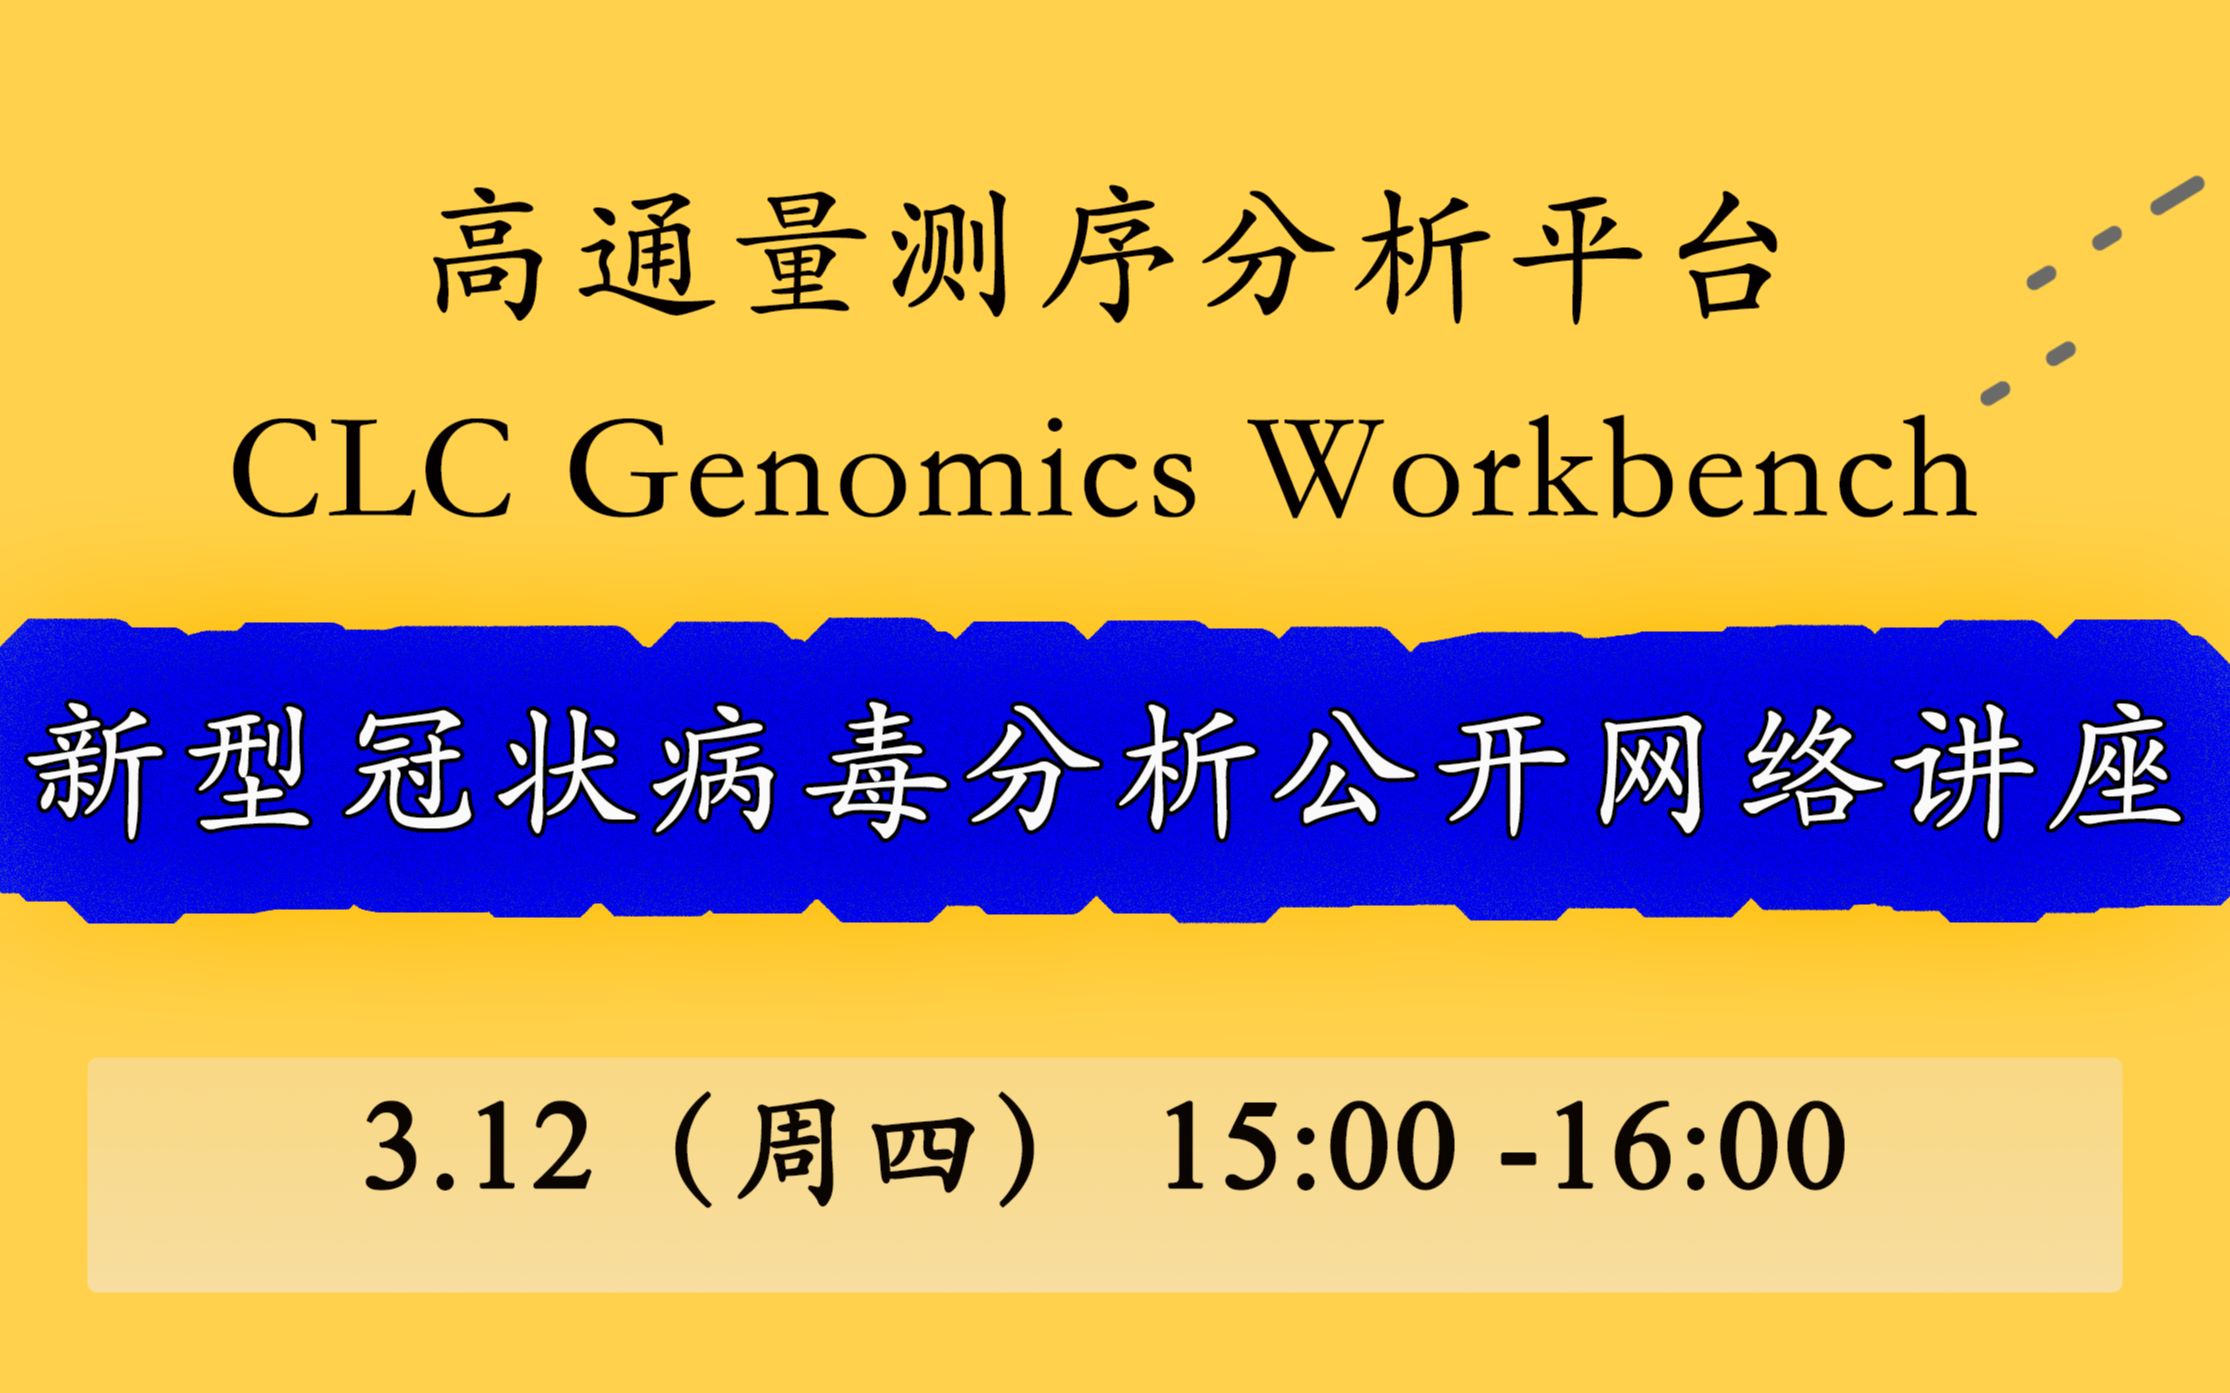 clc genomics workbench 21